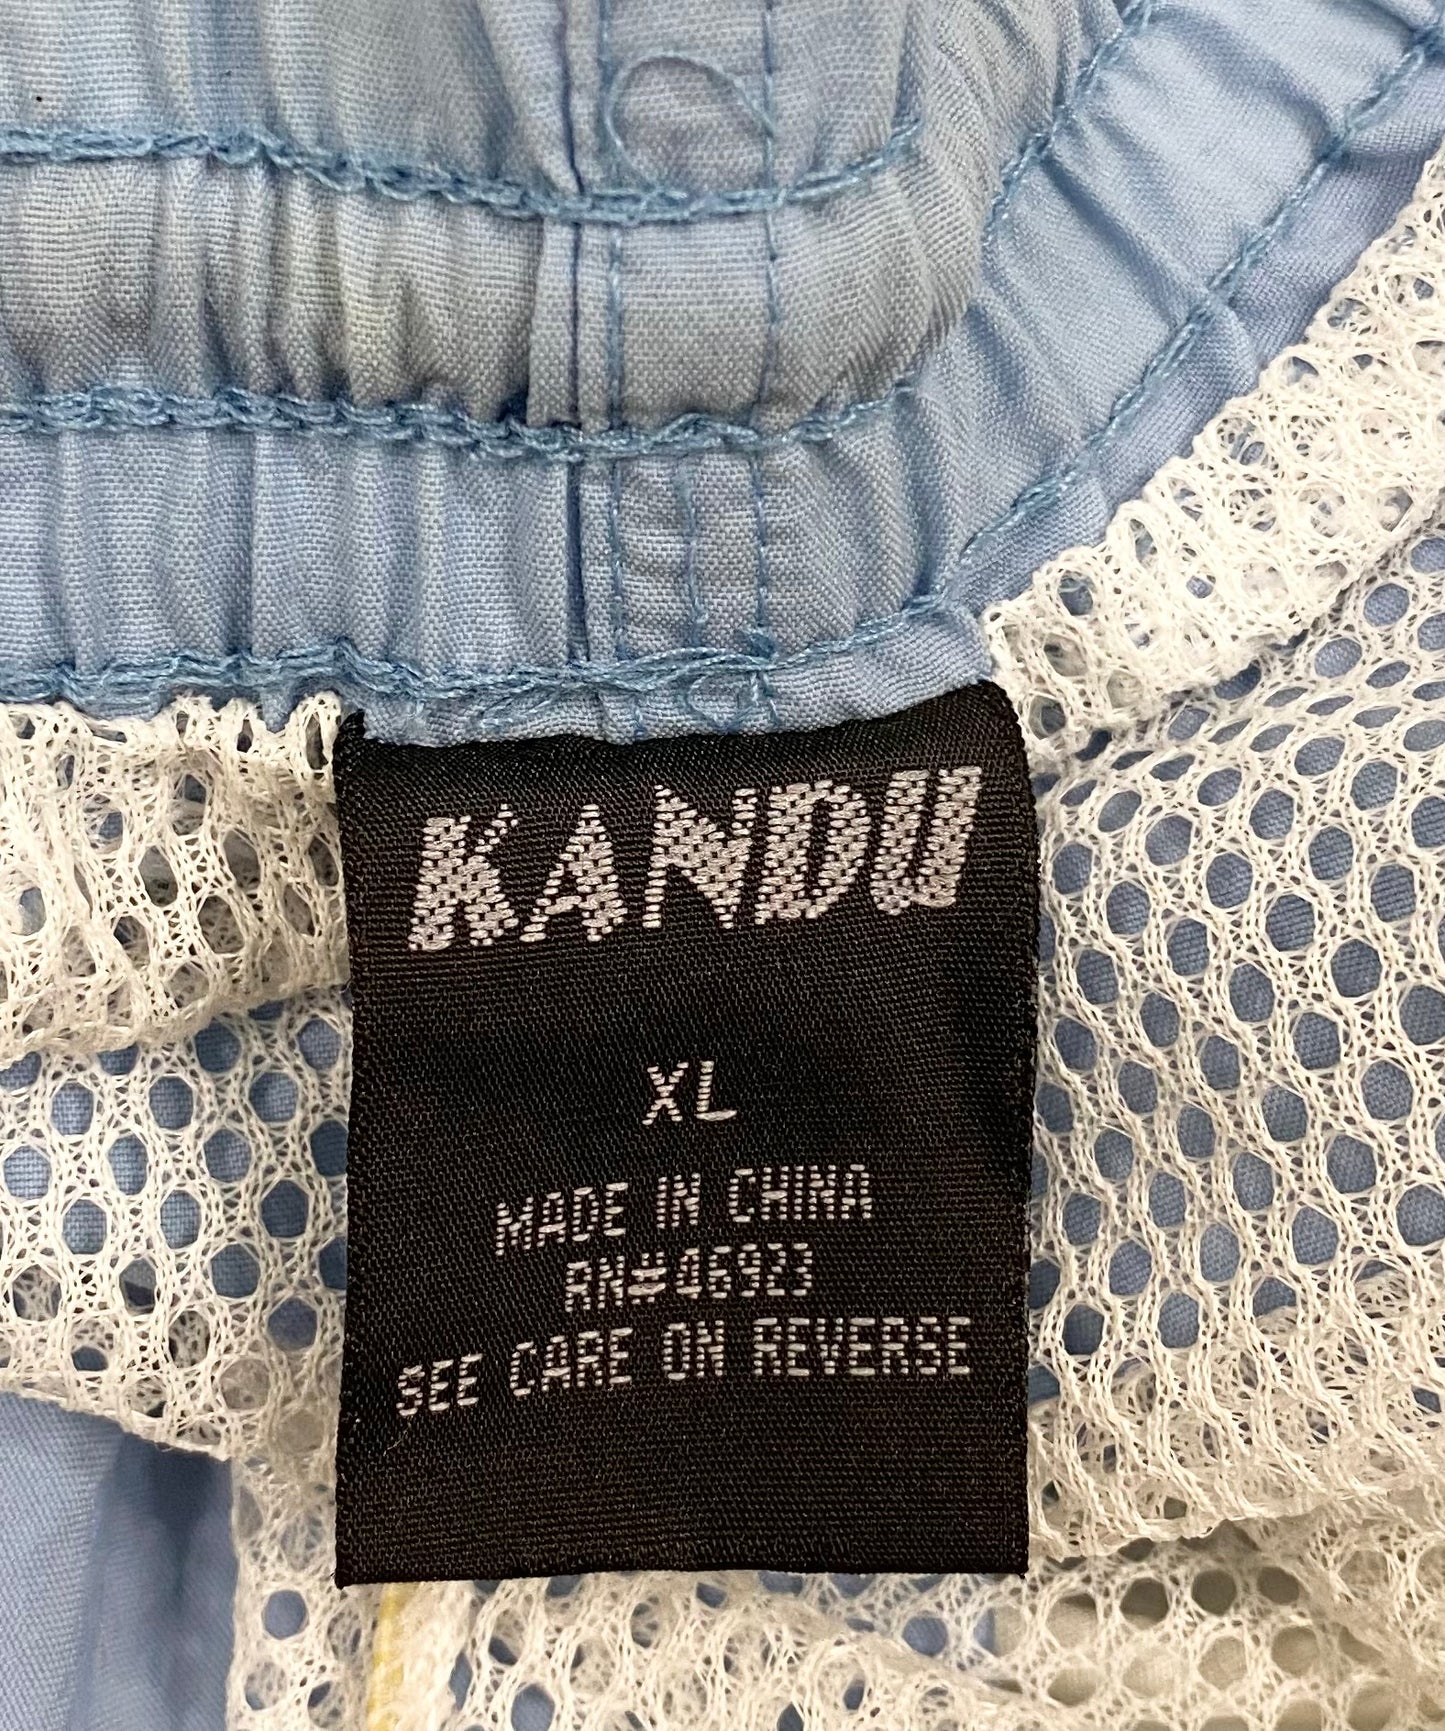 KANDU Men's Board Shorts, Light Blue, Size XL, SKU 000313-2